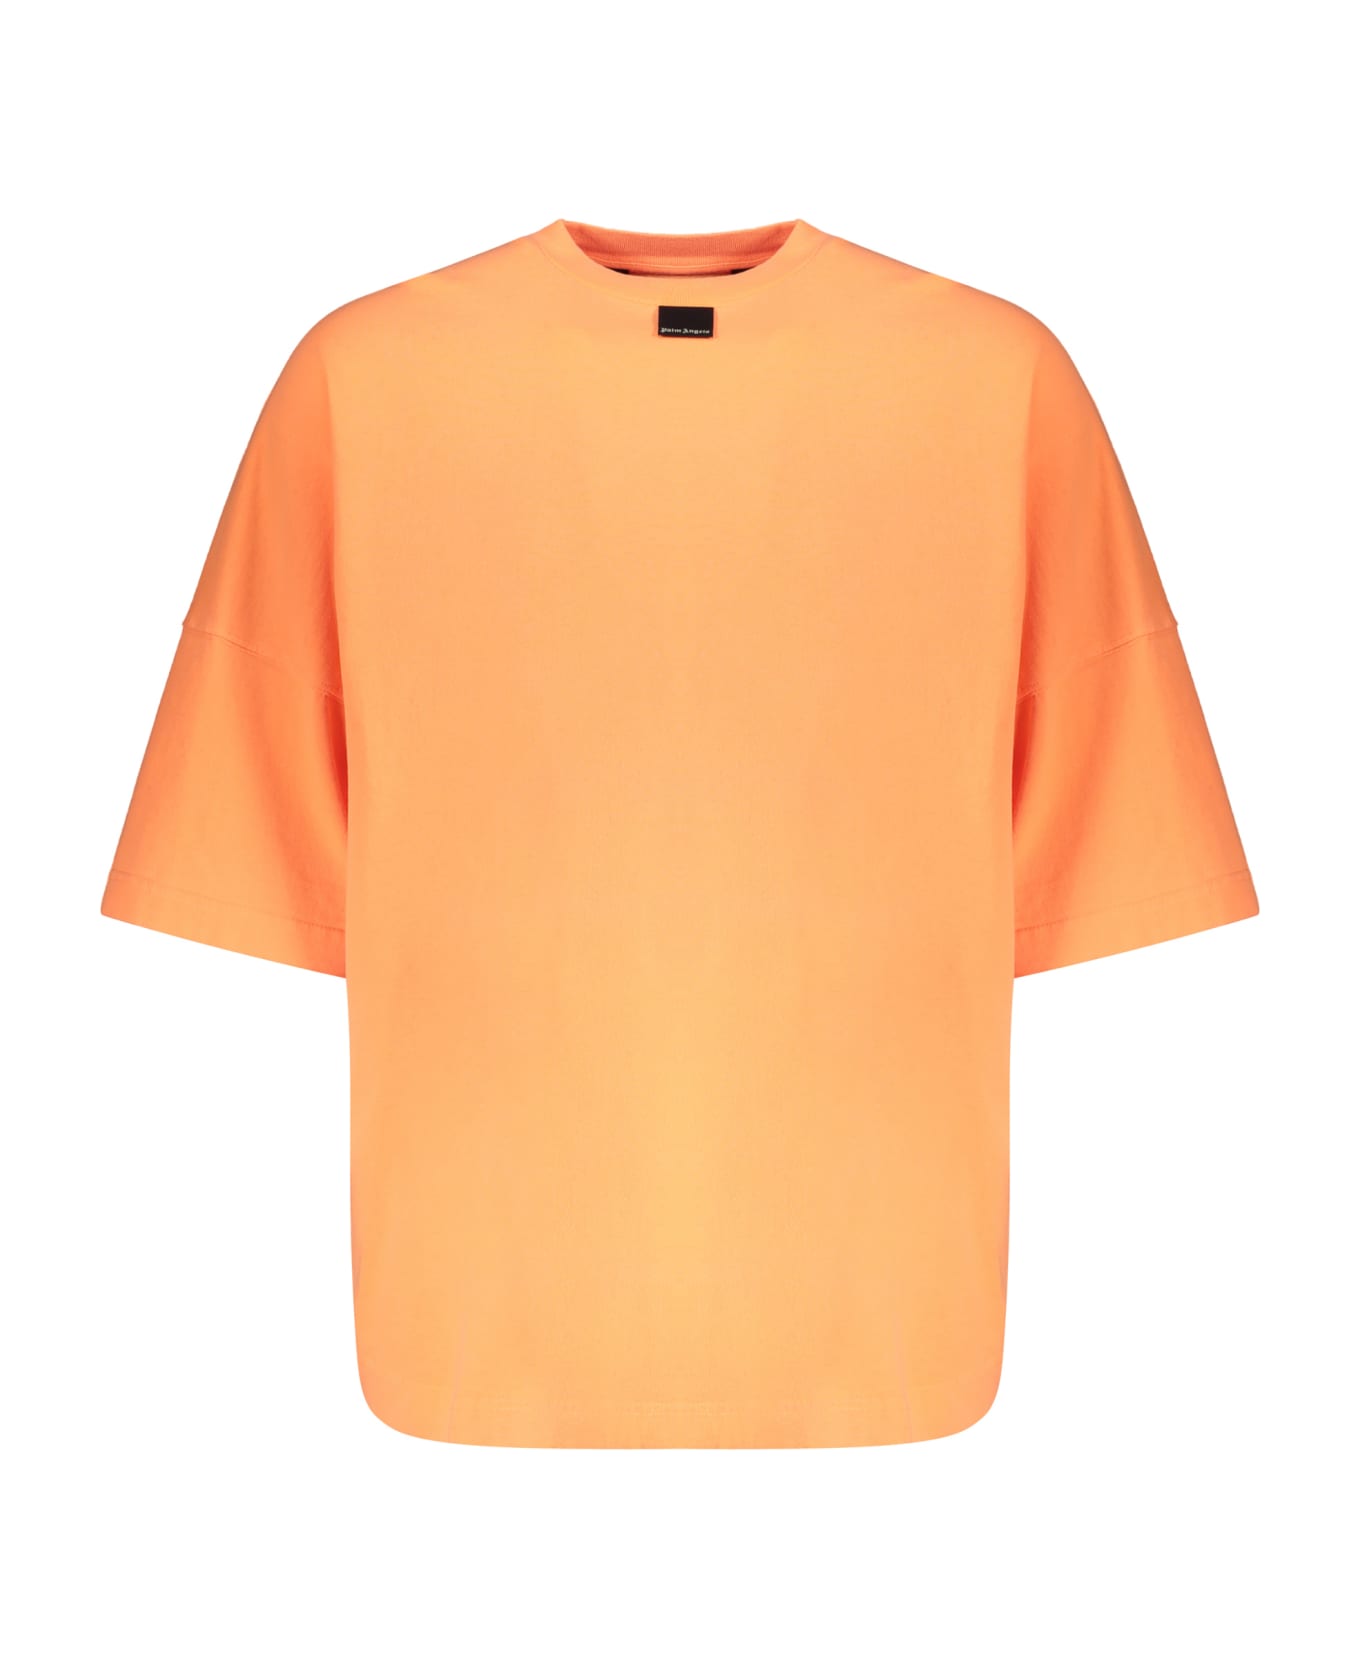 Palm Angels Cotton T-shirt - Orange